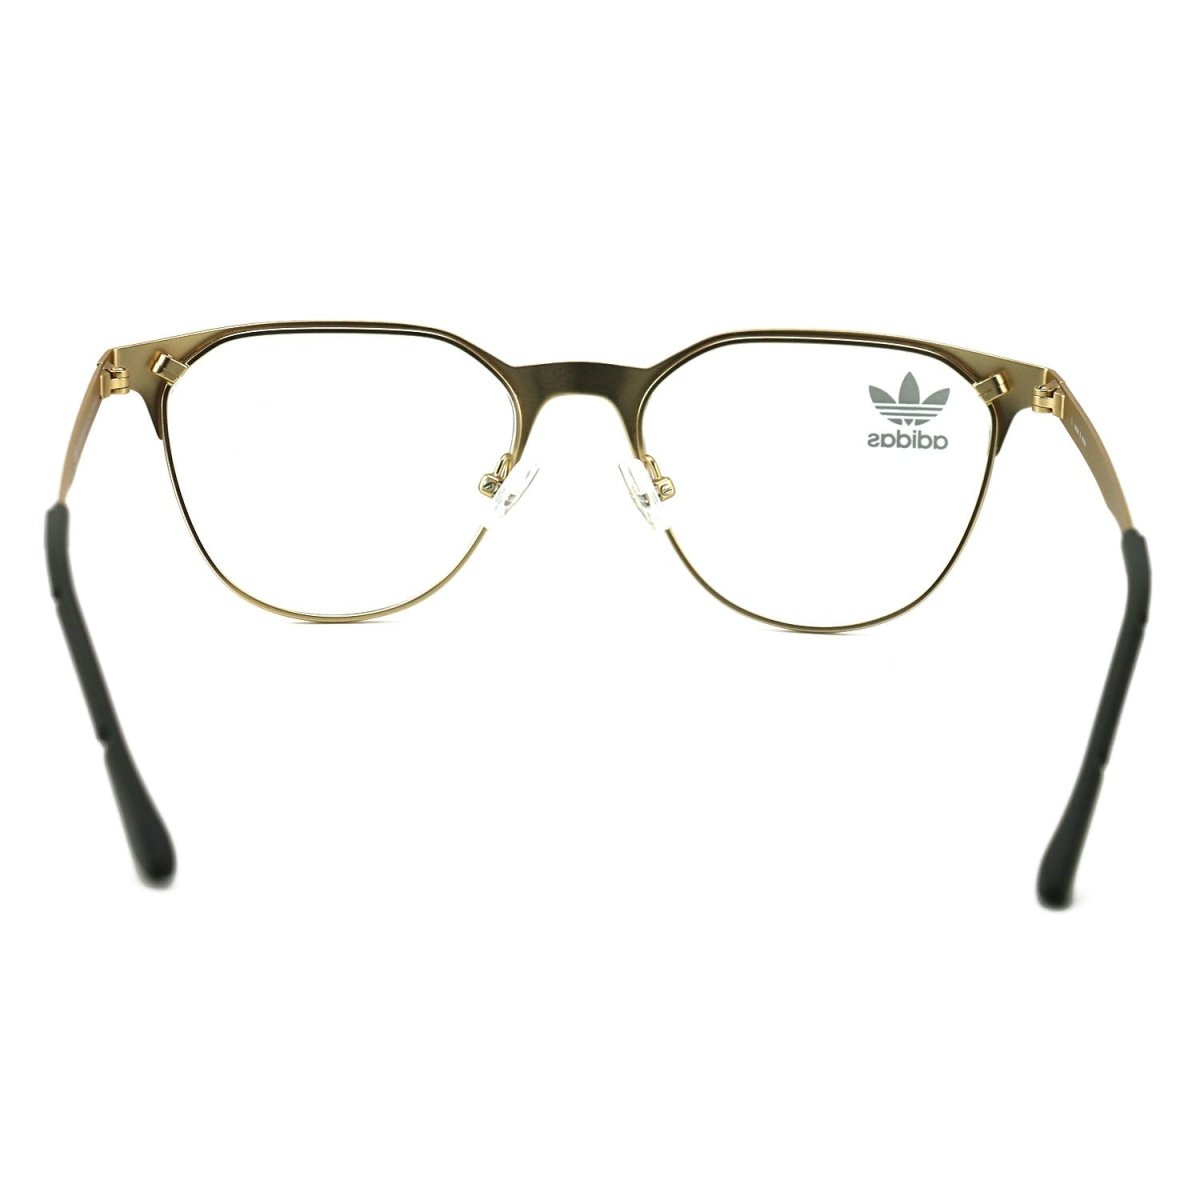 Adidas Womens Eyeglasses AOM005O/N 009.120 Black Gold 52 18 145 Frames Oval - megafashion11Monturas